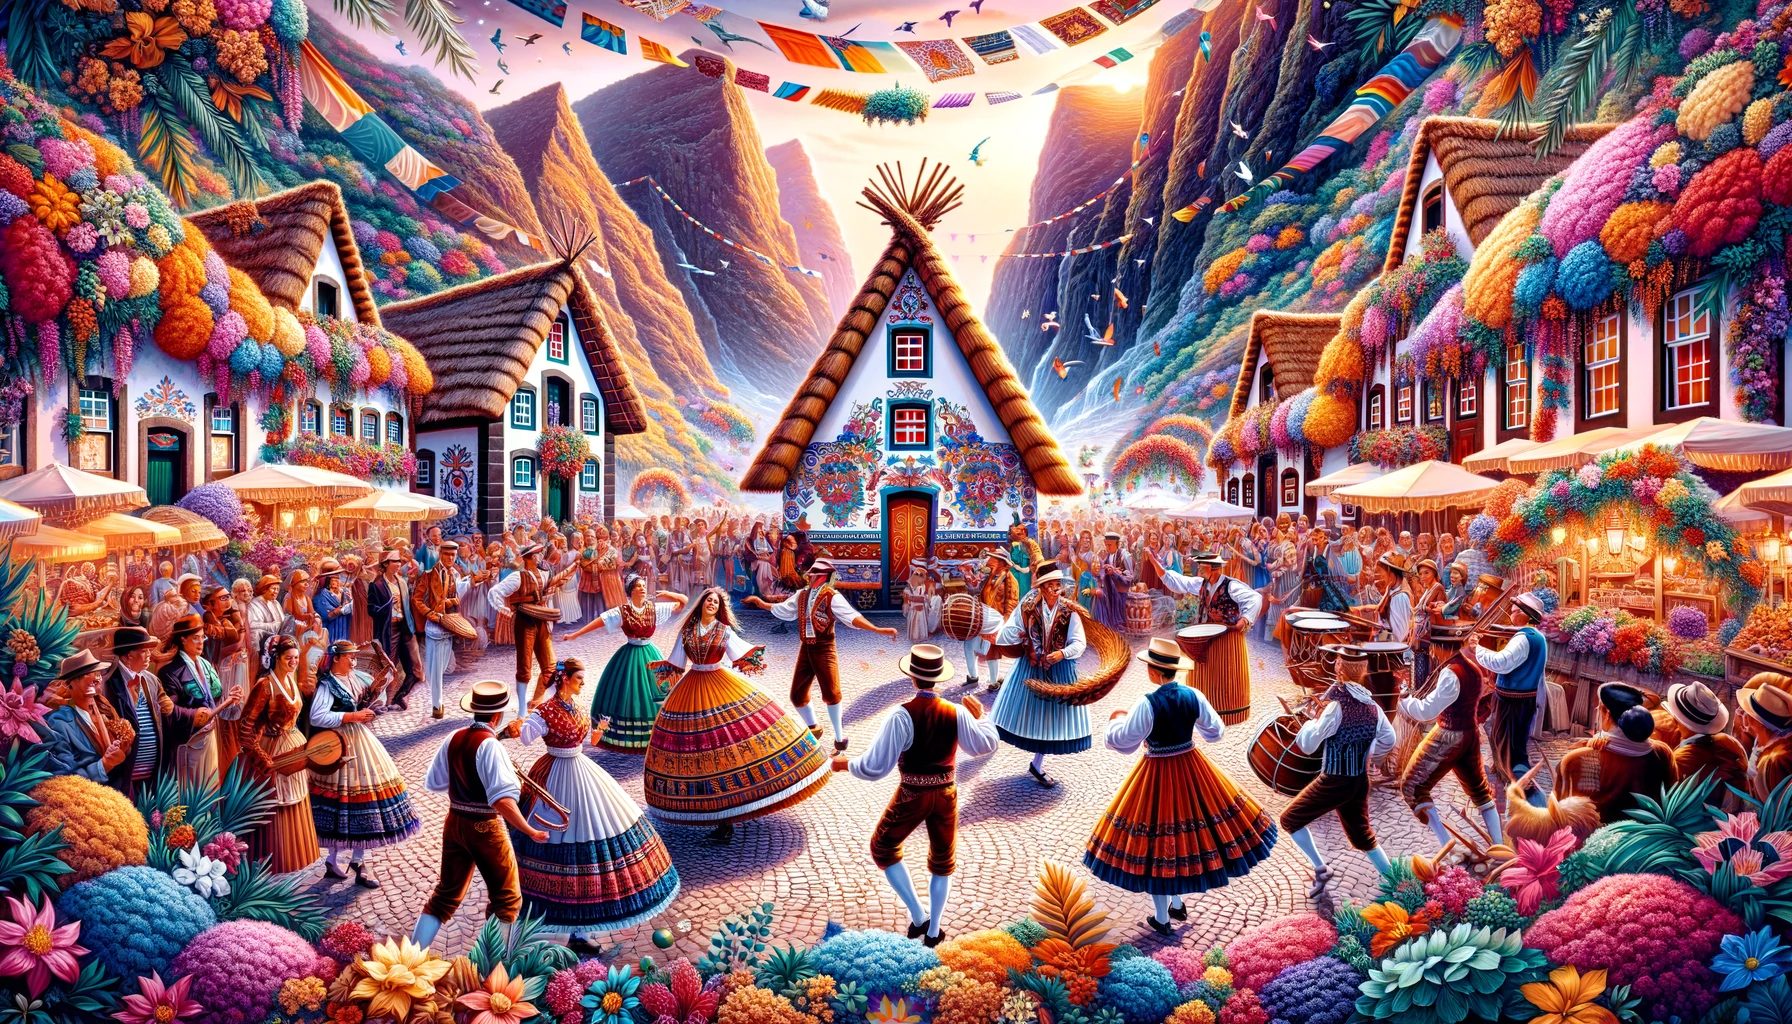 Colorful traditional folk festival in a vibrant village.